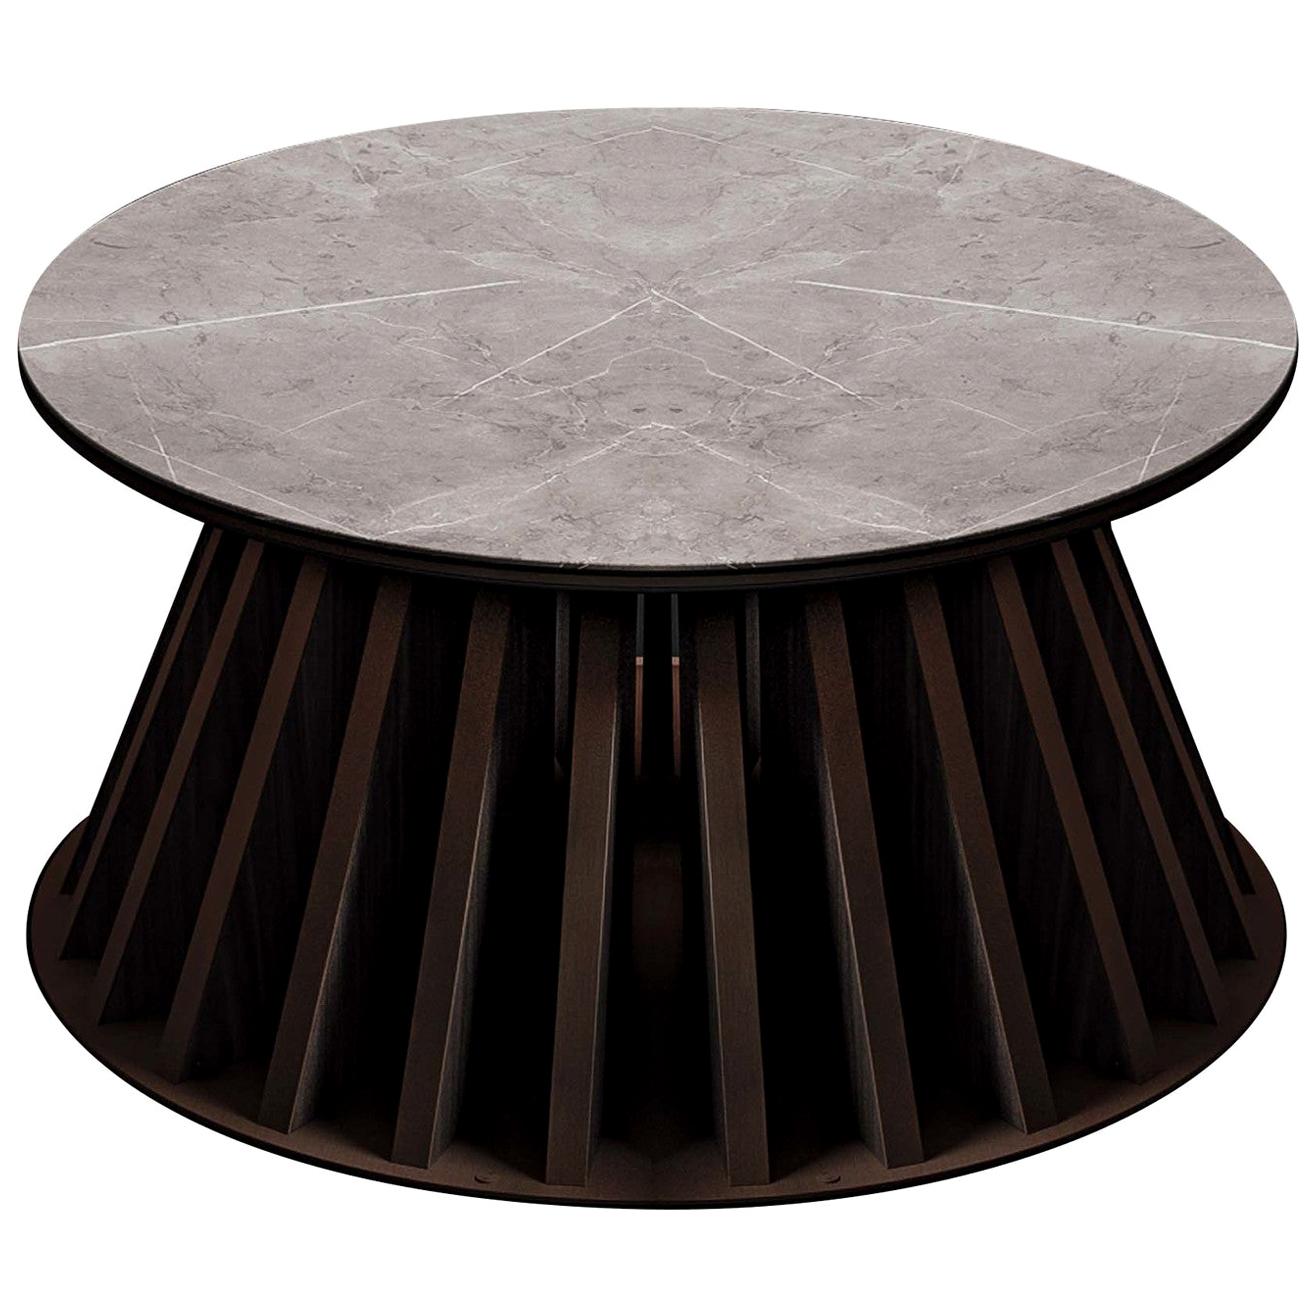 Table basse en marbre de taille moyenne